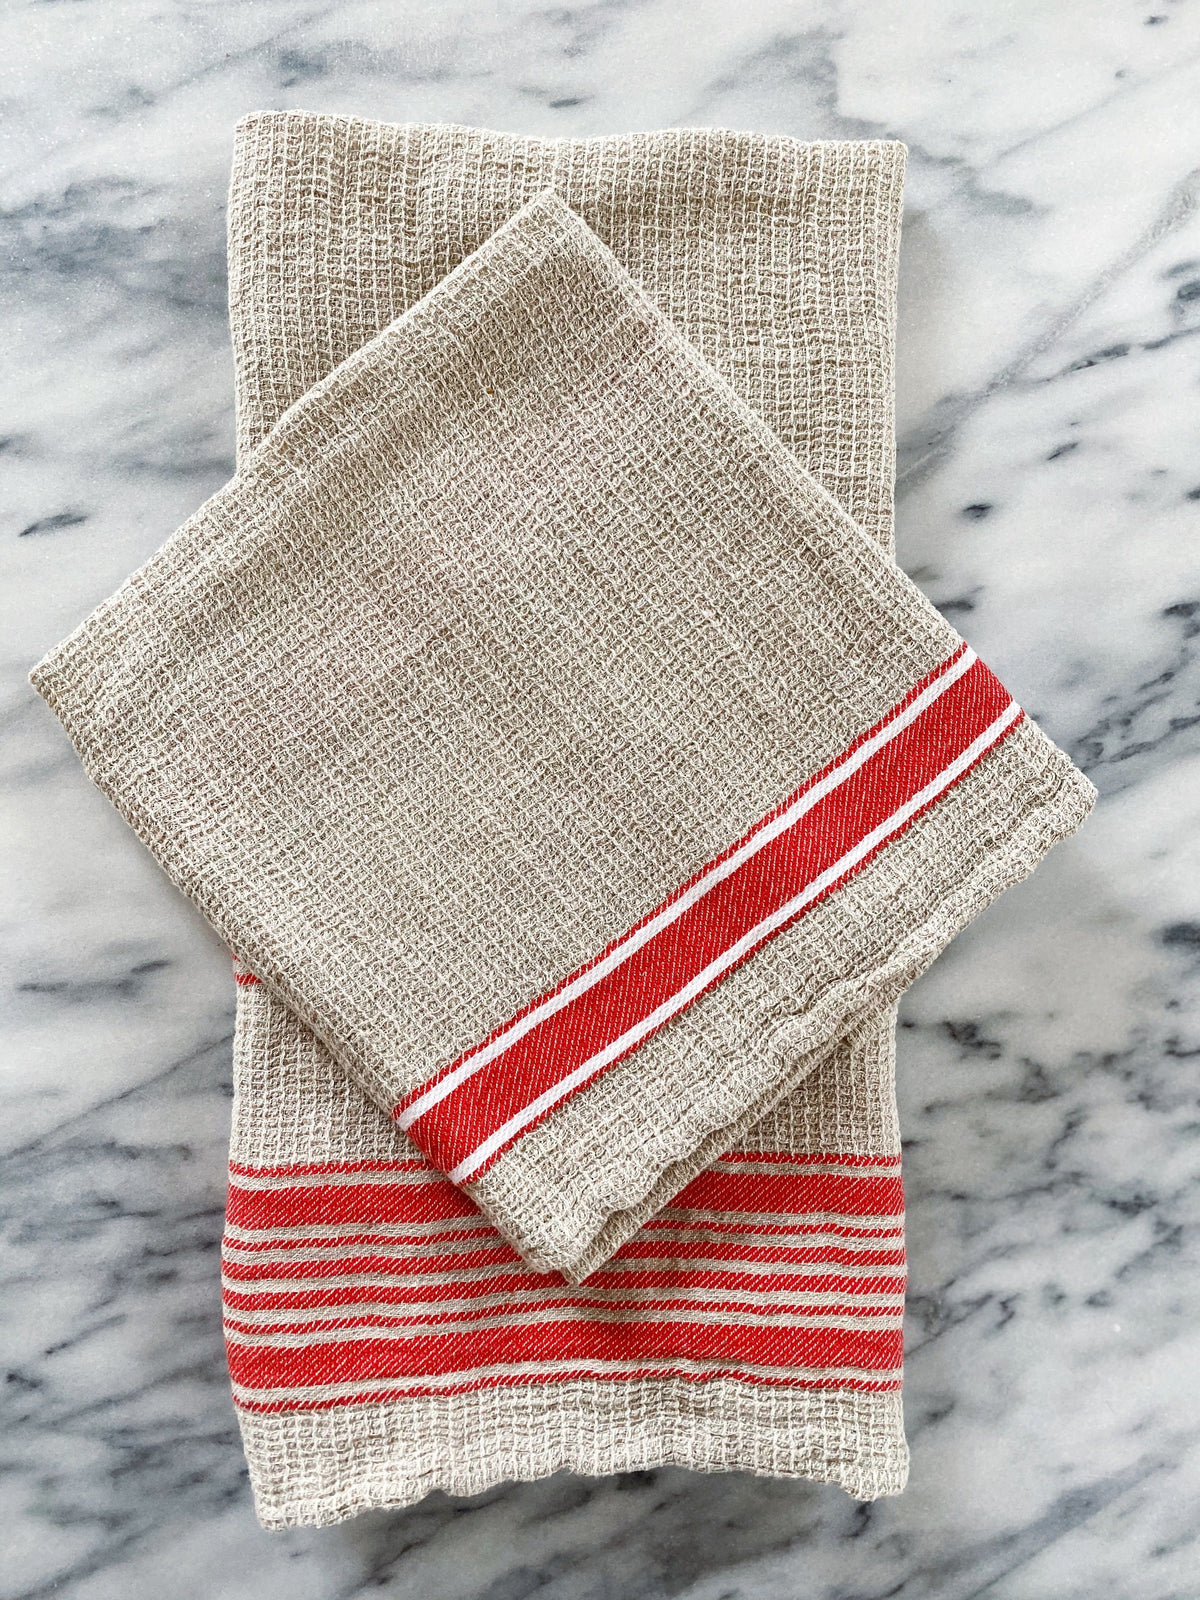 Farmhouse Kitchen Towels |Rustic Home Decor | Home Dessert Tray Kitchen  Towel | Rustic Kitchen Linen